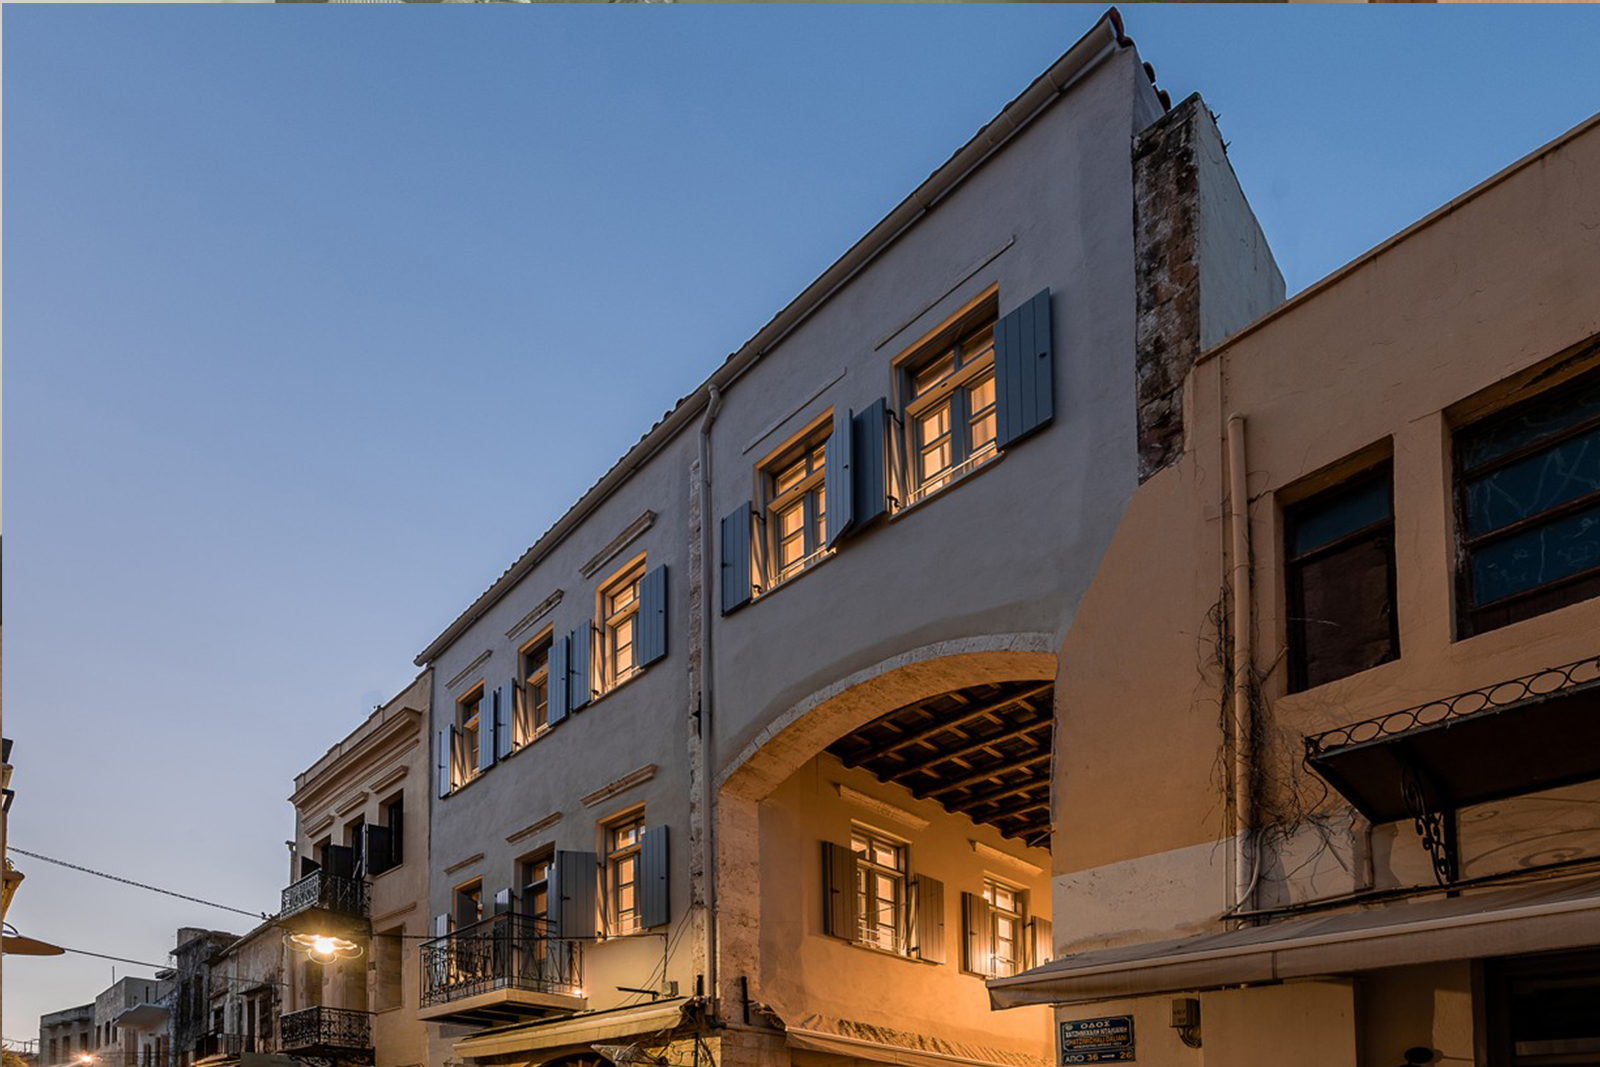 Archisearch Malmo Historic Hotel in Chania, Greece | Niki Ainatzi & Iosif Vasilodimitrakis